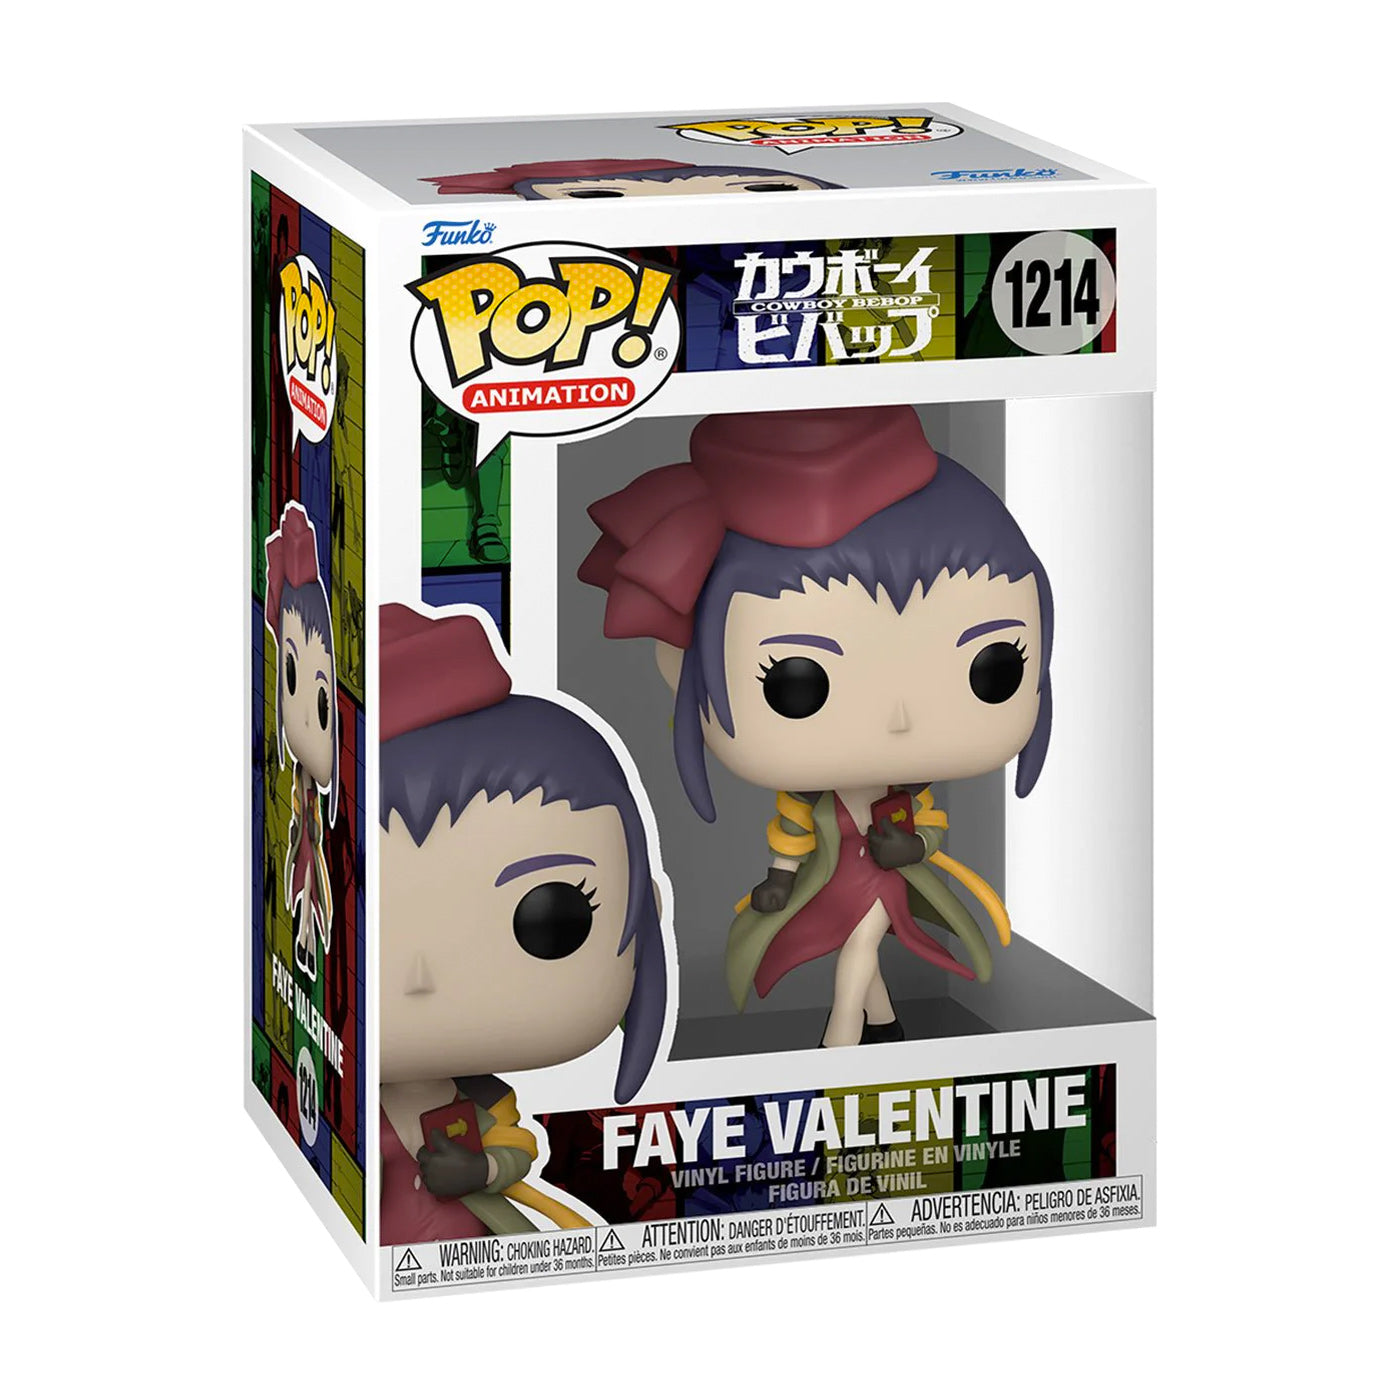 Funko Pop: Faye Valentine (1214)